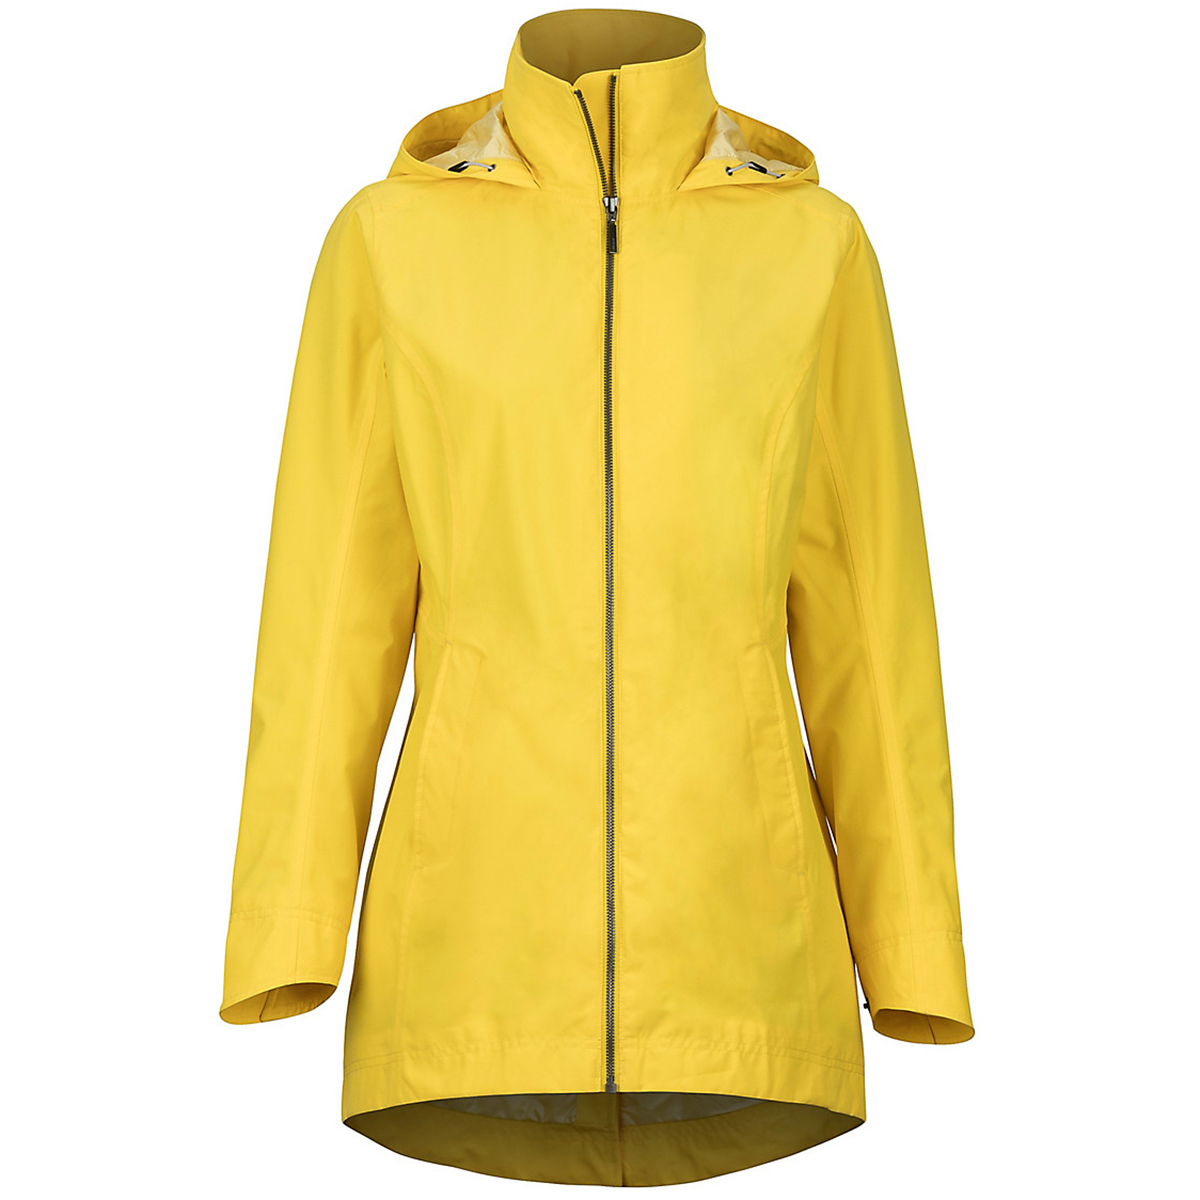 Marmot Women's Lea Jacket - Yellow, S